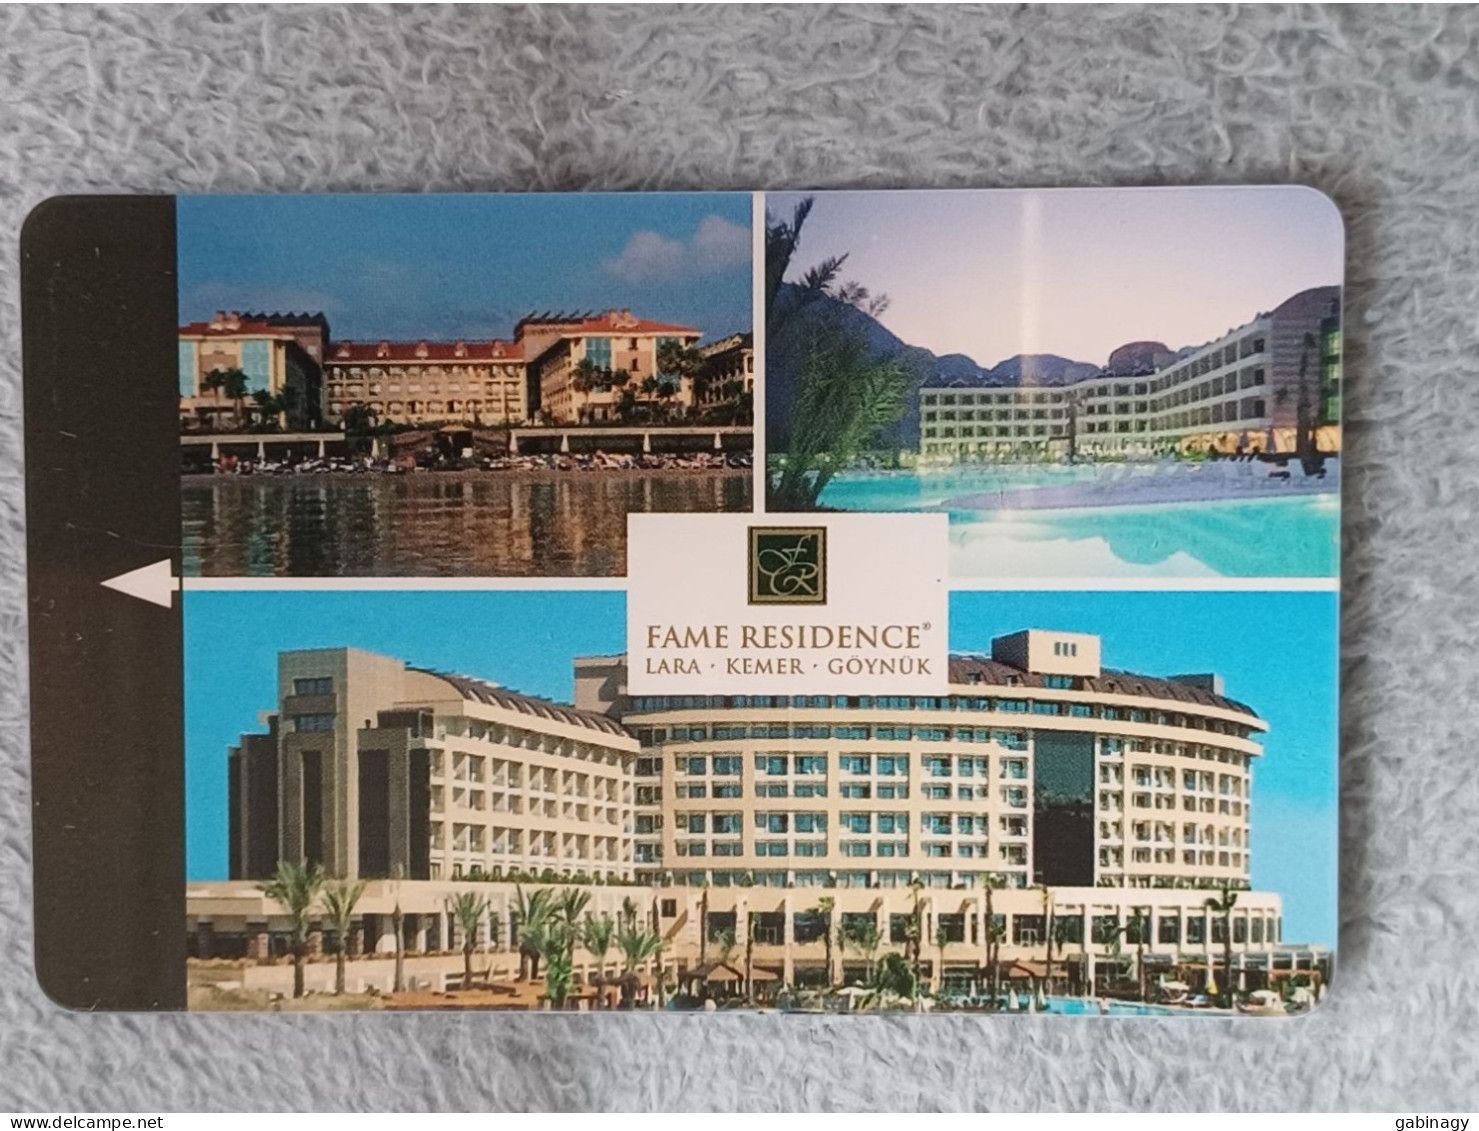 HOTEL KEYS - 2533 - TURKEY - FAME RESIDENCE - Hotel Keycards